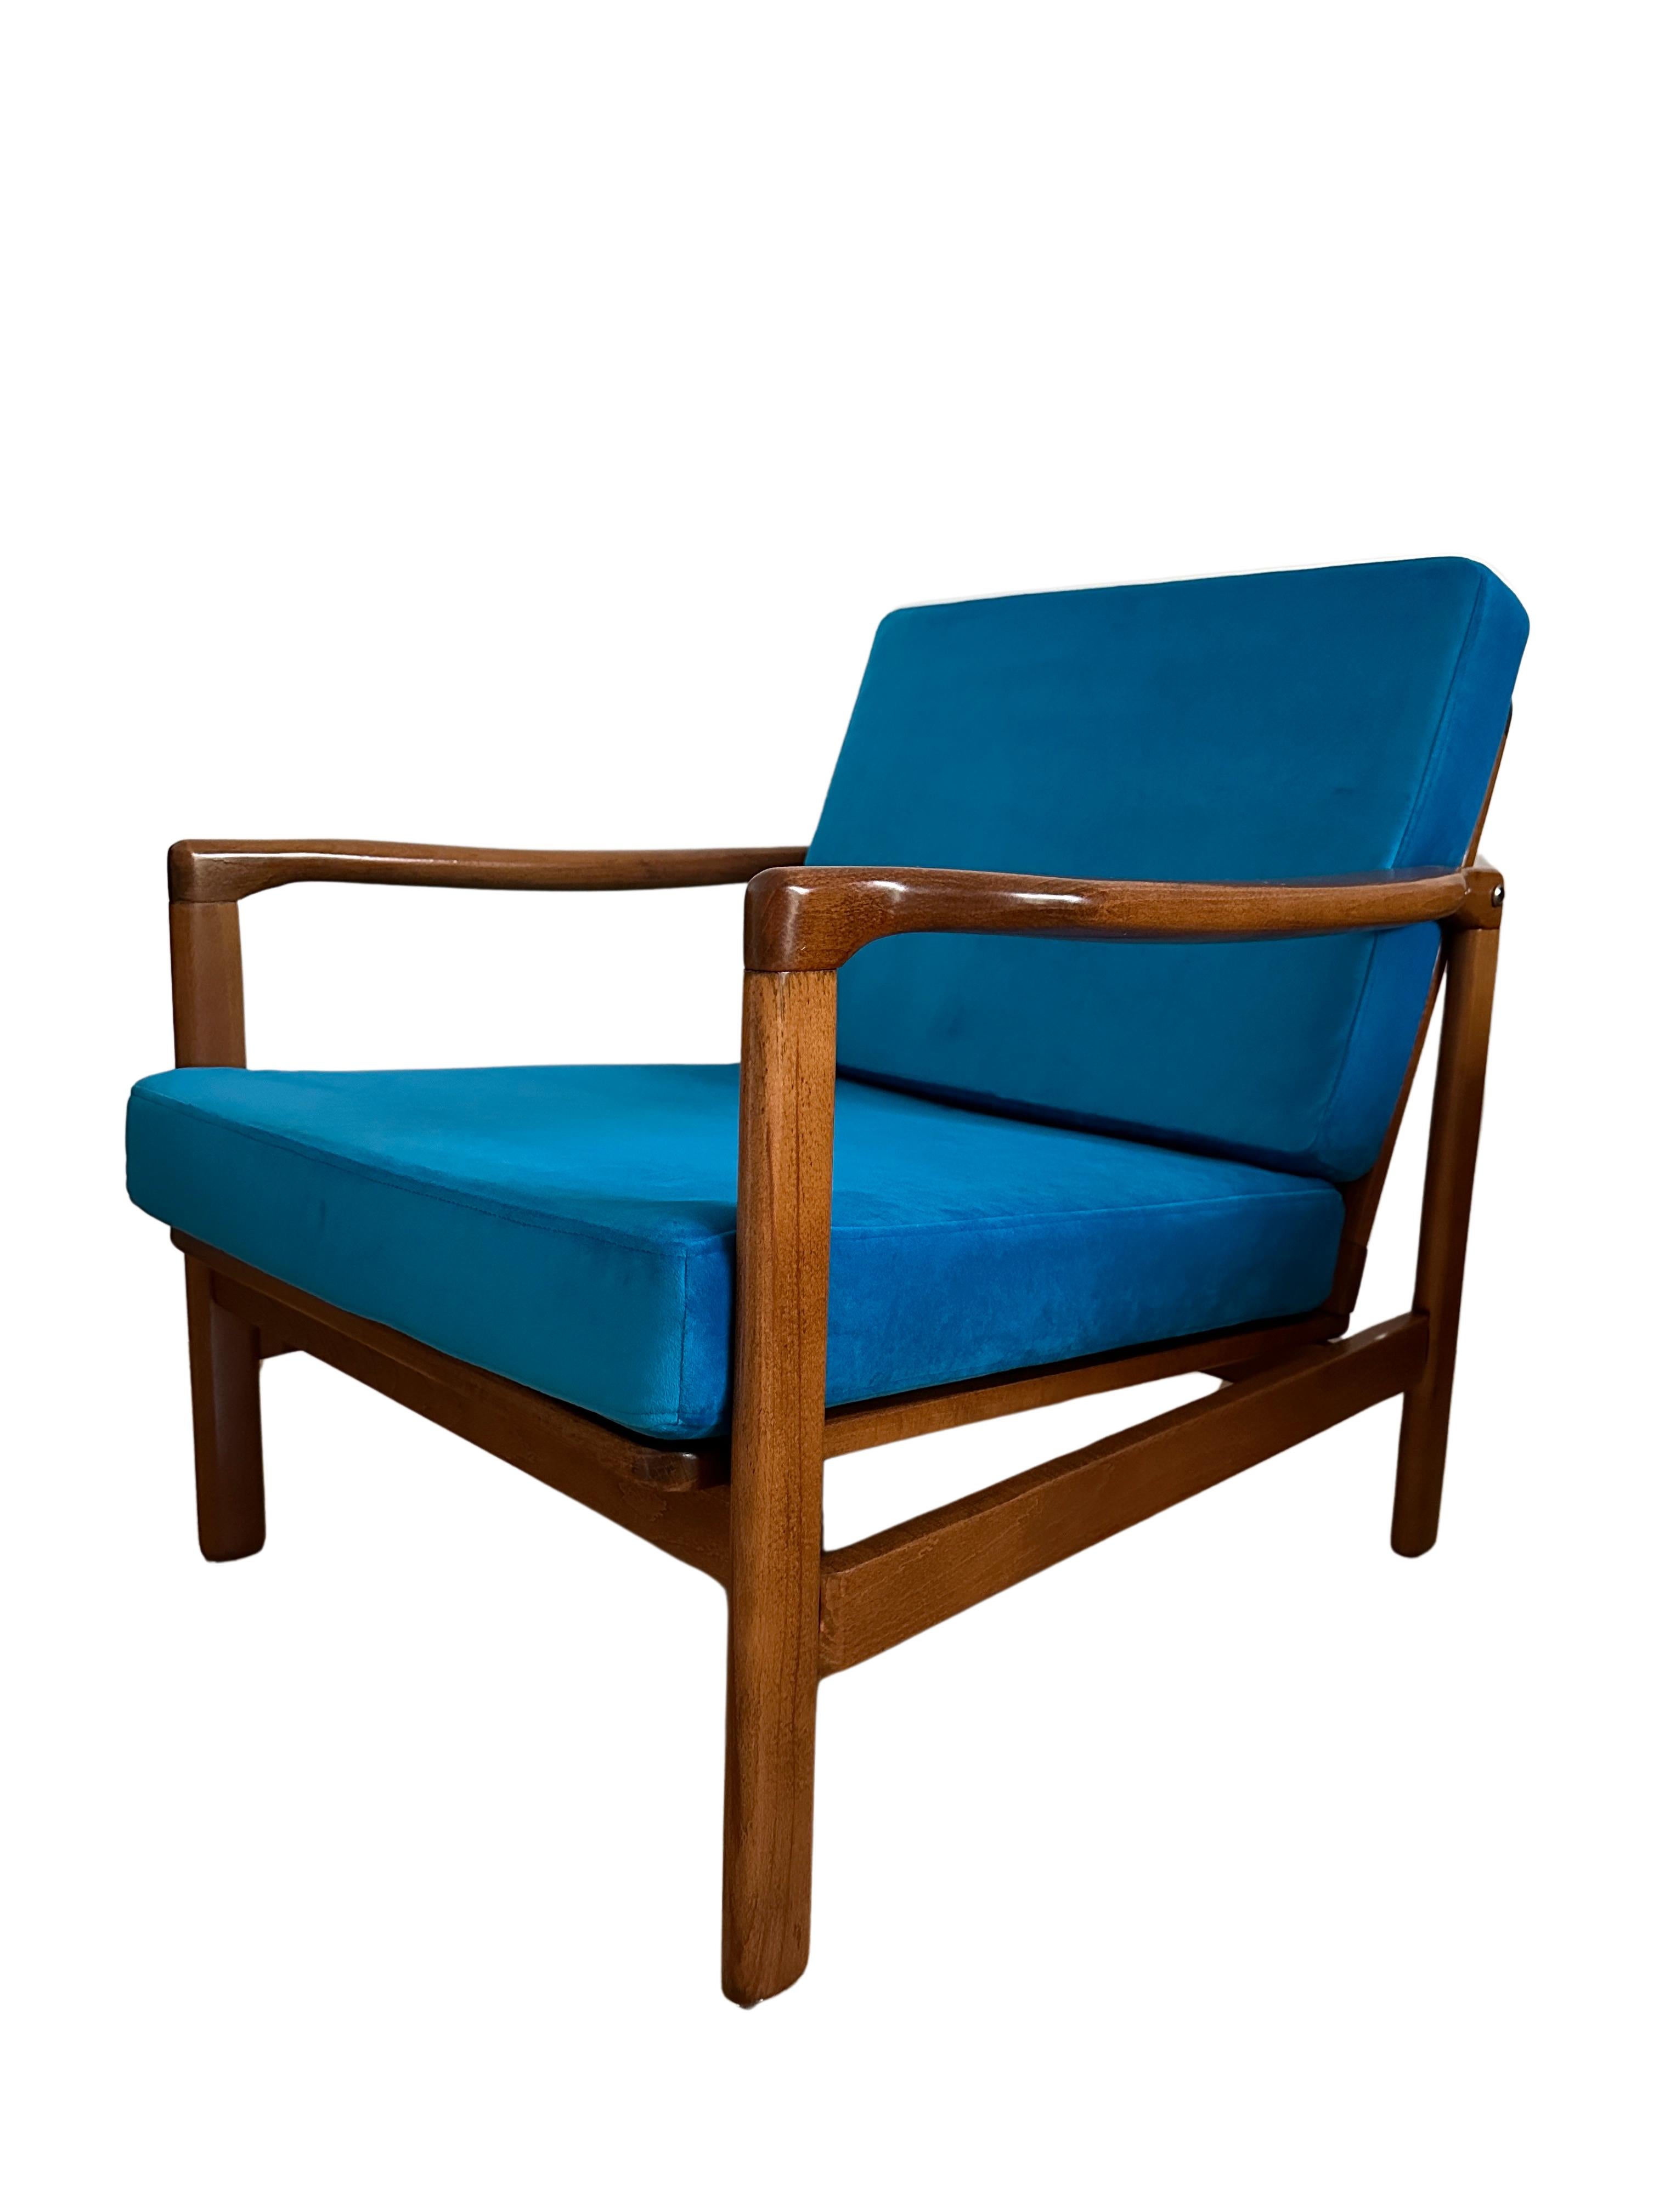 Mid-Century Modern Midcentury Armchair by Zenon Baczyk, Blue Velvet Upholstery, Poland, 1960s For Sale